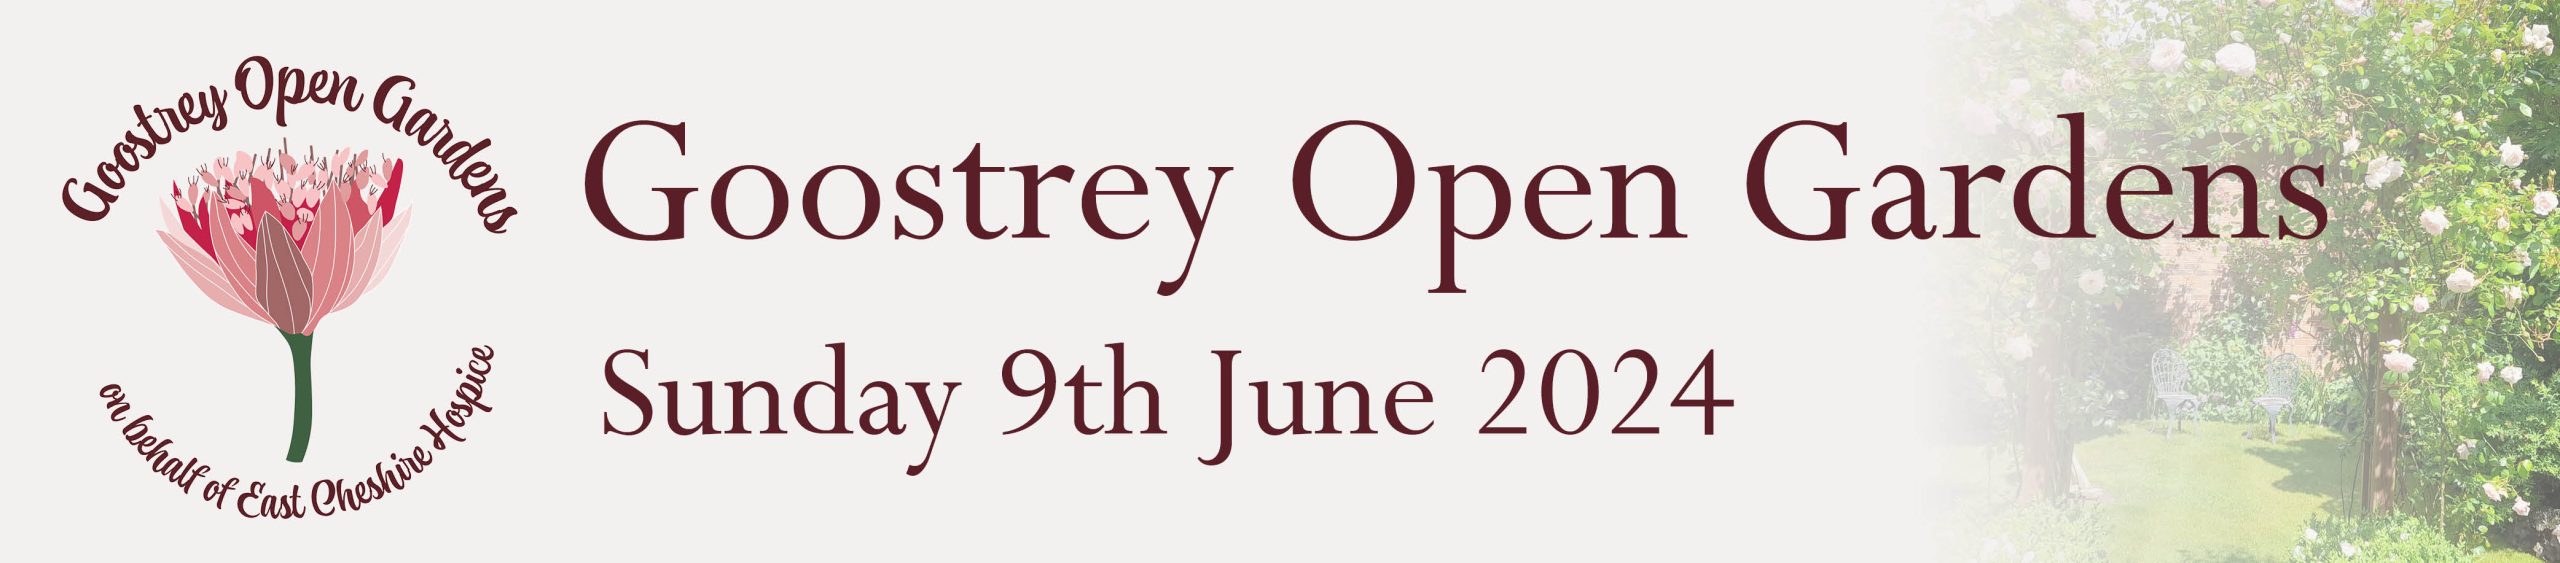 Goostrey Open Gardens Banner